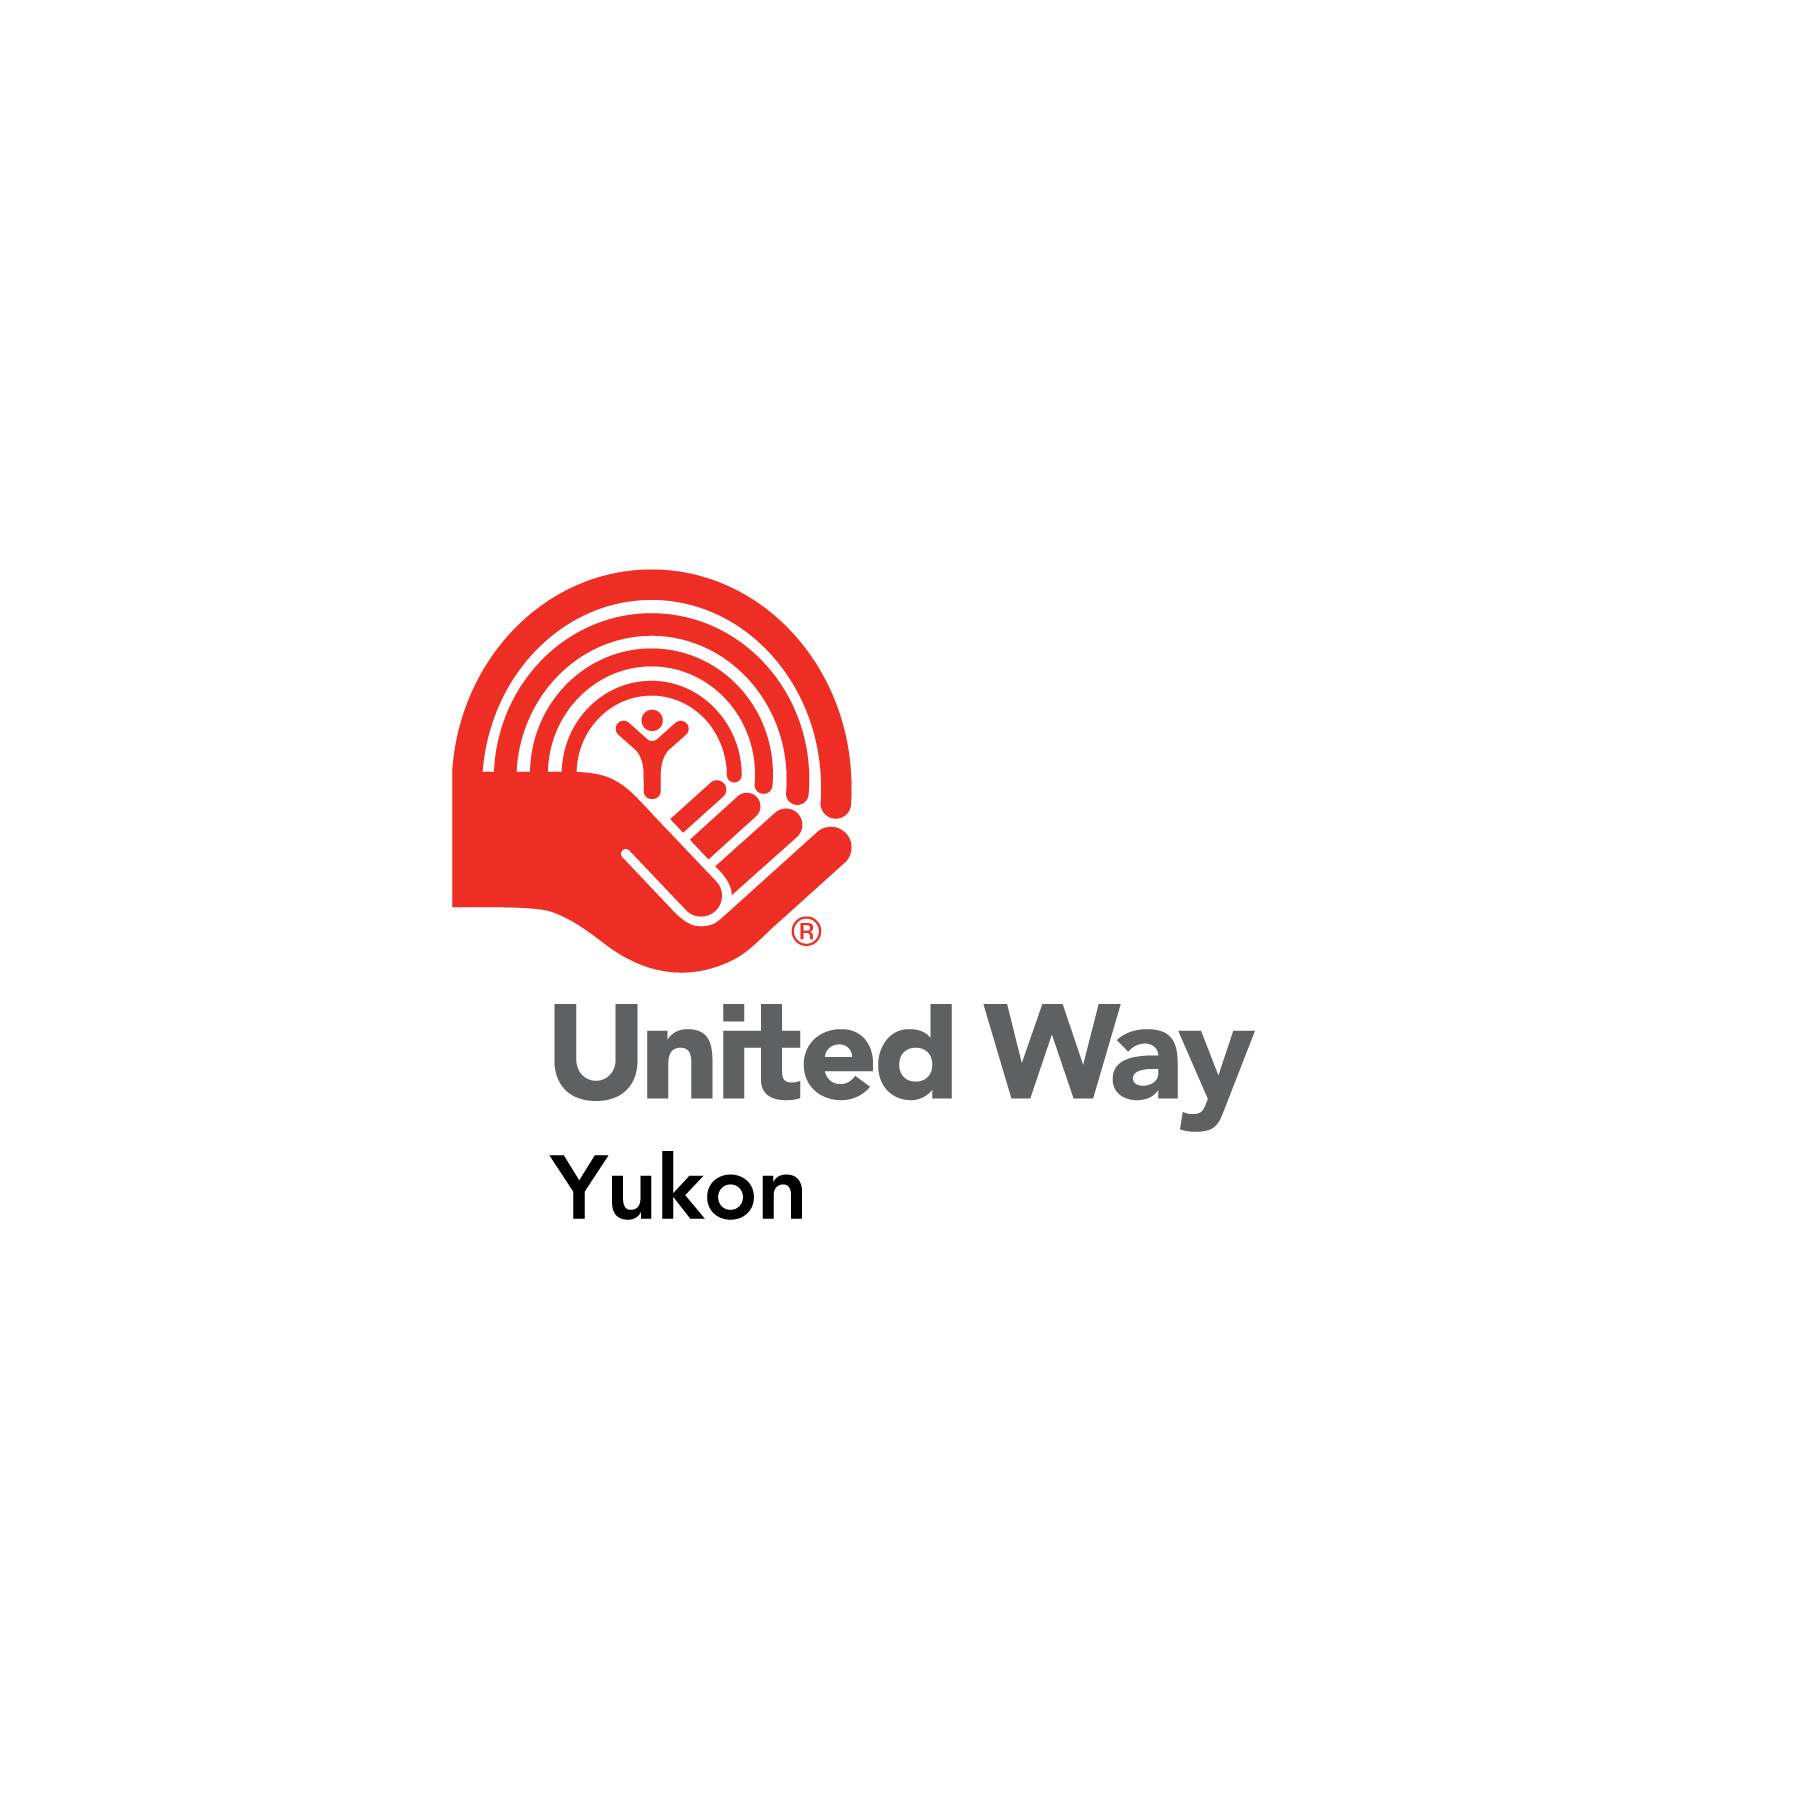 United Way Yukon logo